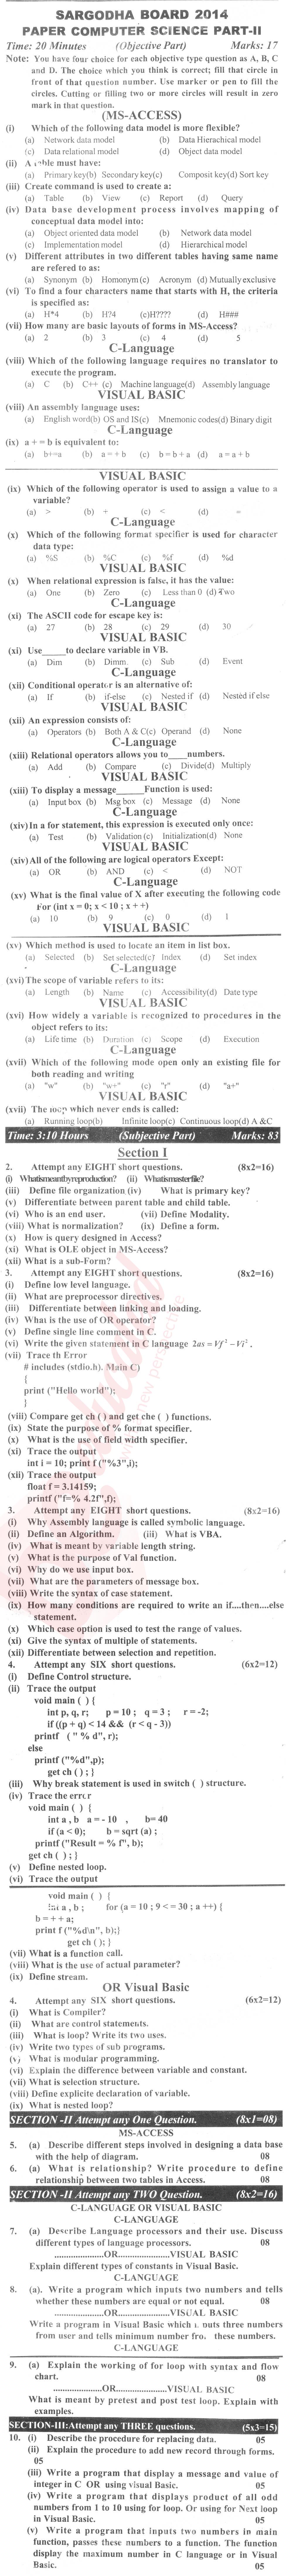 Computer Science ICS Part 2 Past Paper Group 1 BISE Sargodha 2014